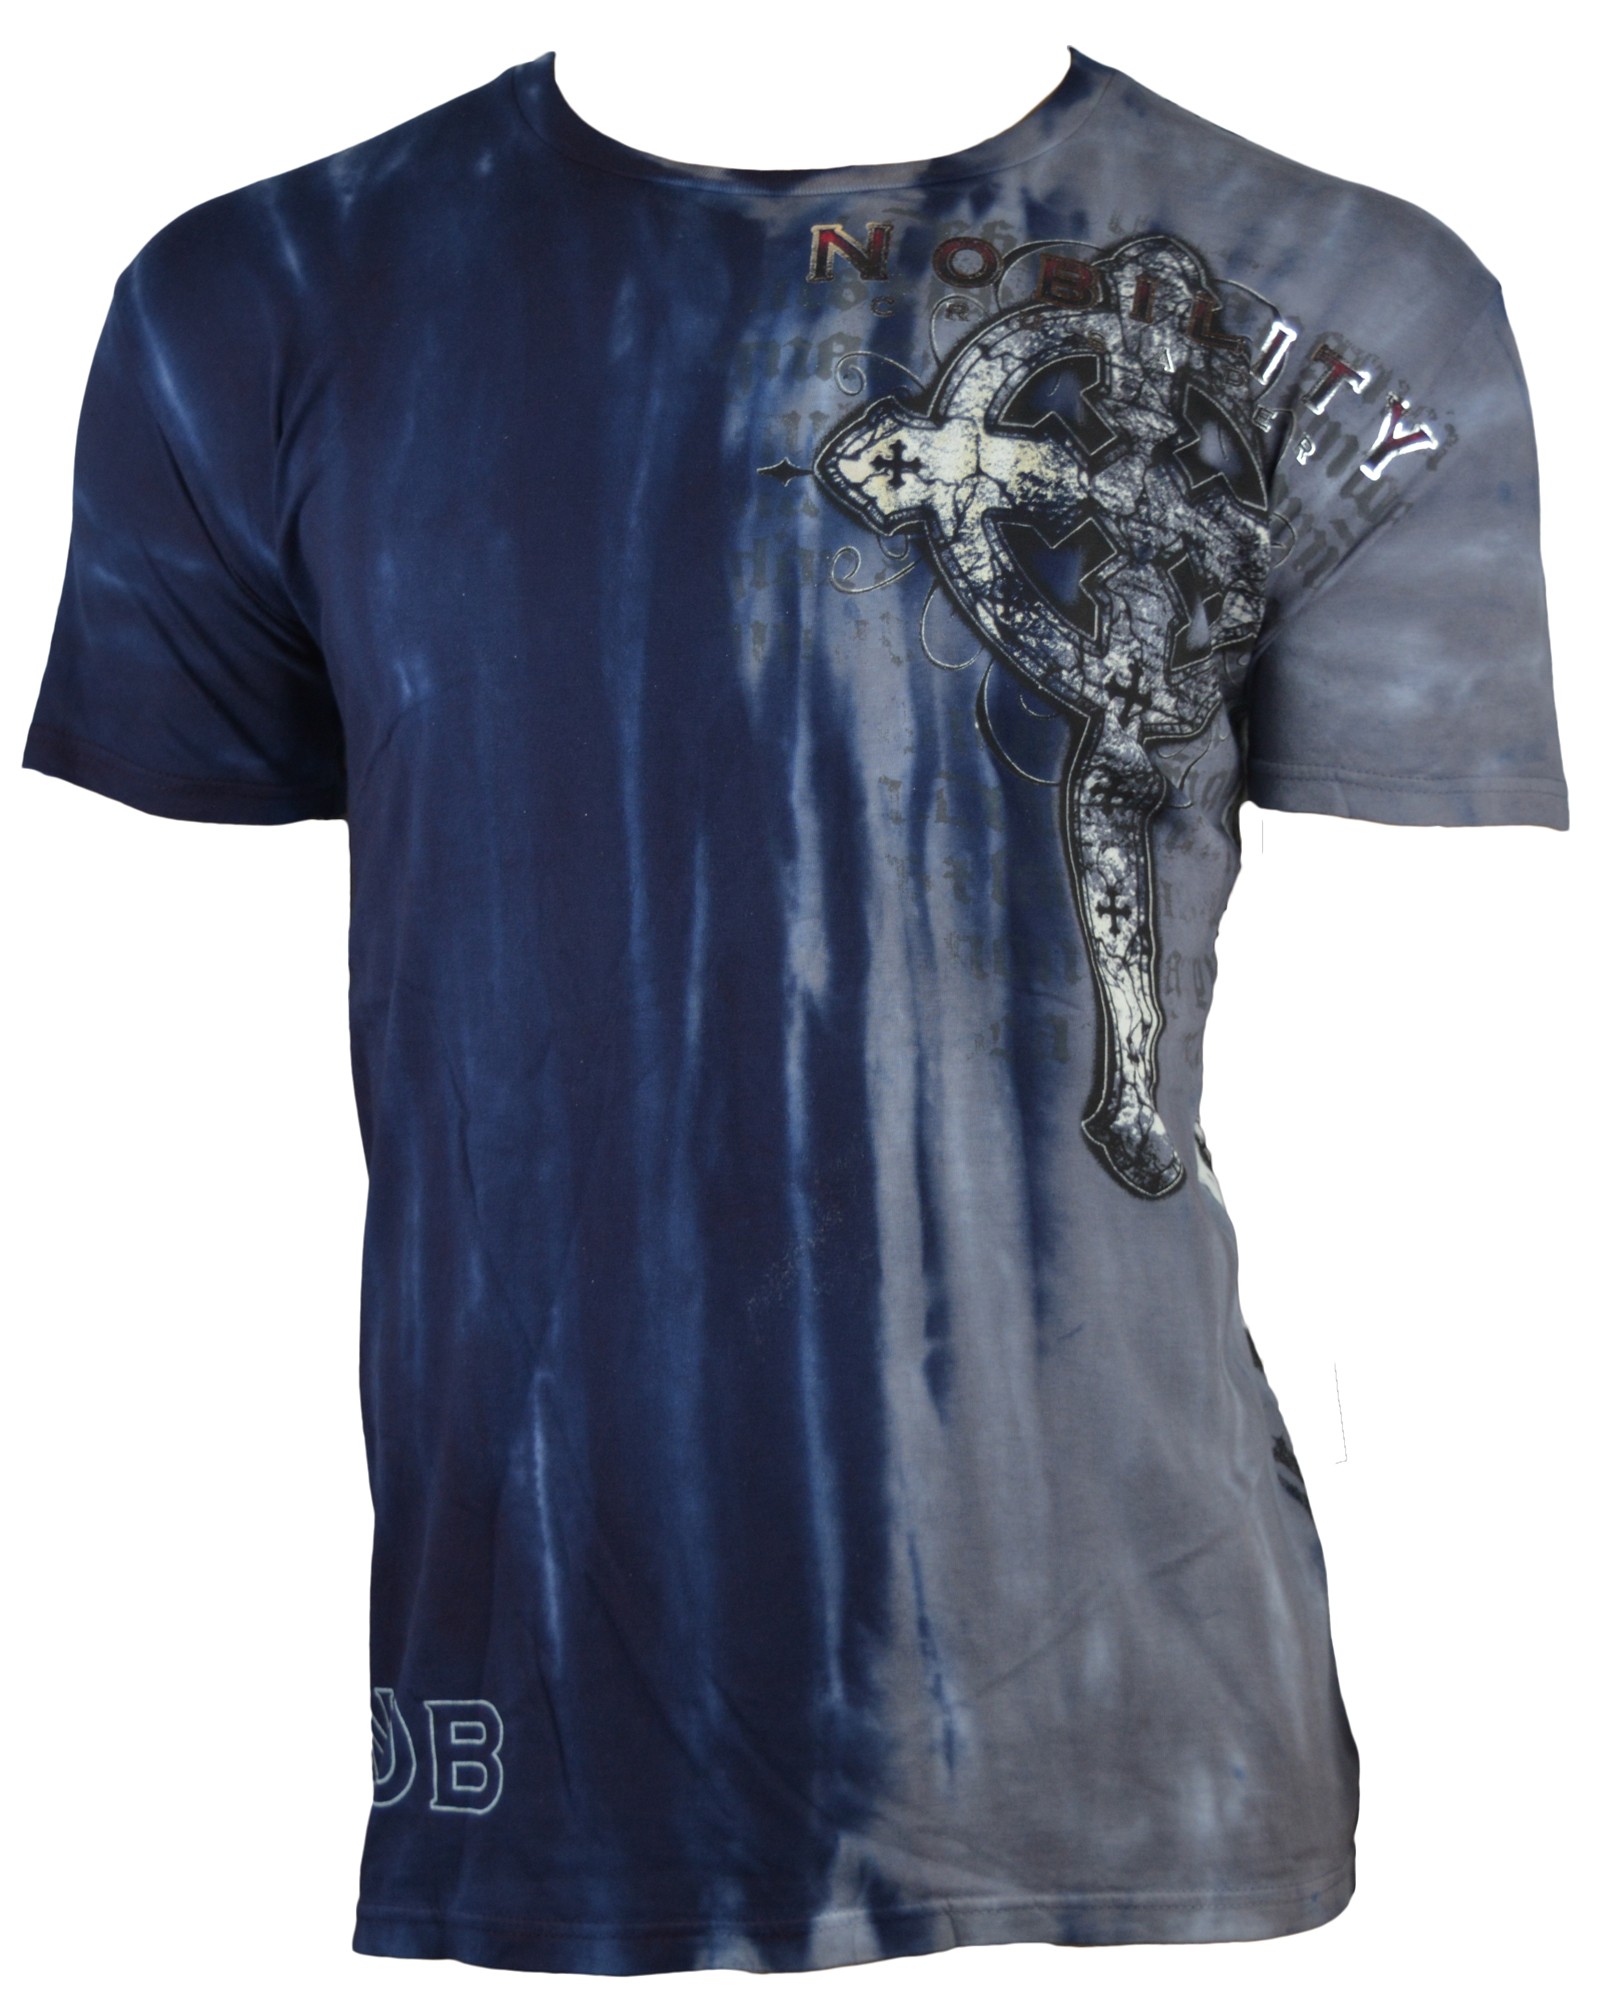 Xzavier - Nobility Cross T-Shirt Front